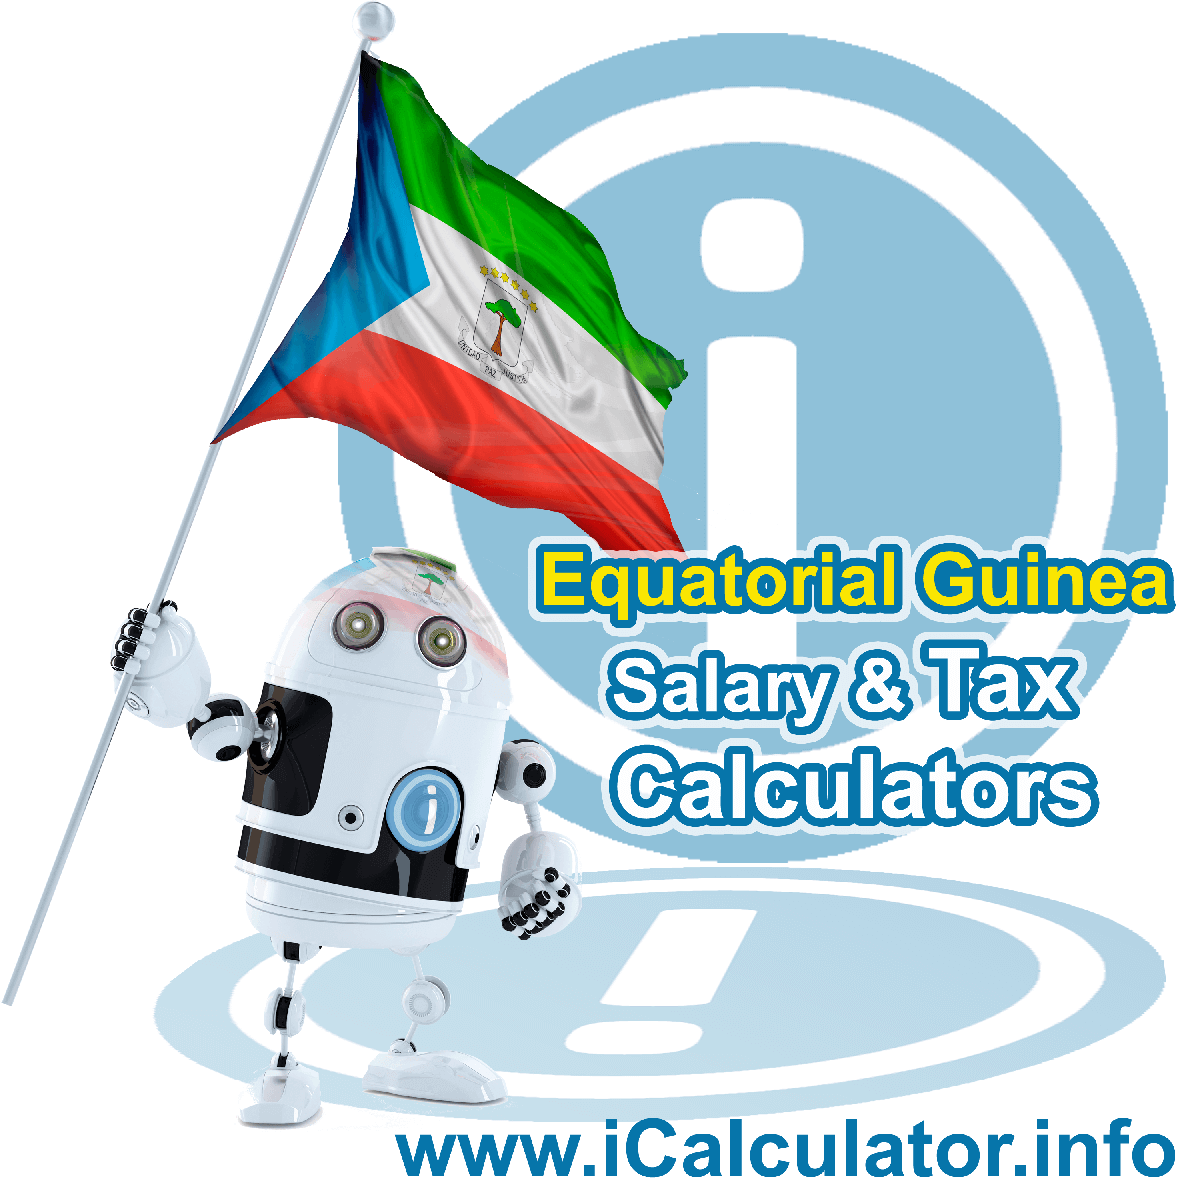 Equatorial Guinea Wage Calculator. This image shows the Equatorial Guinea flag and information relating to the tax formula for the Equatorial Guinea Tax Calculator